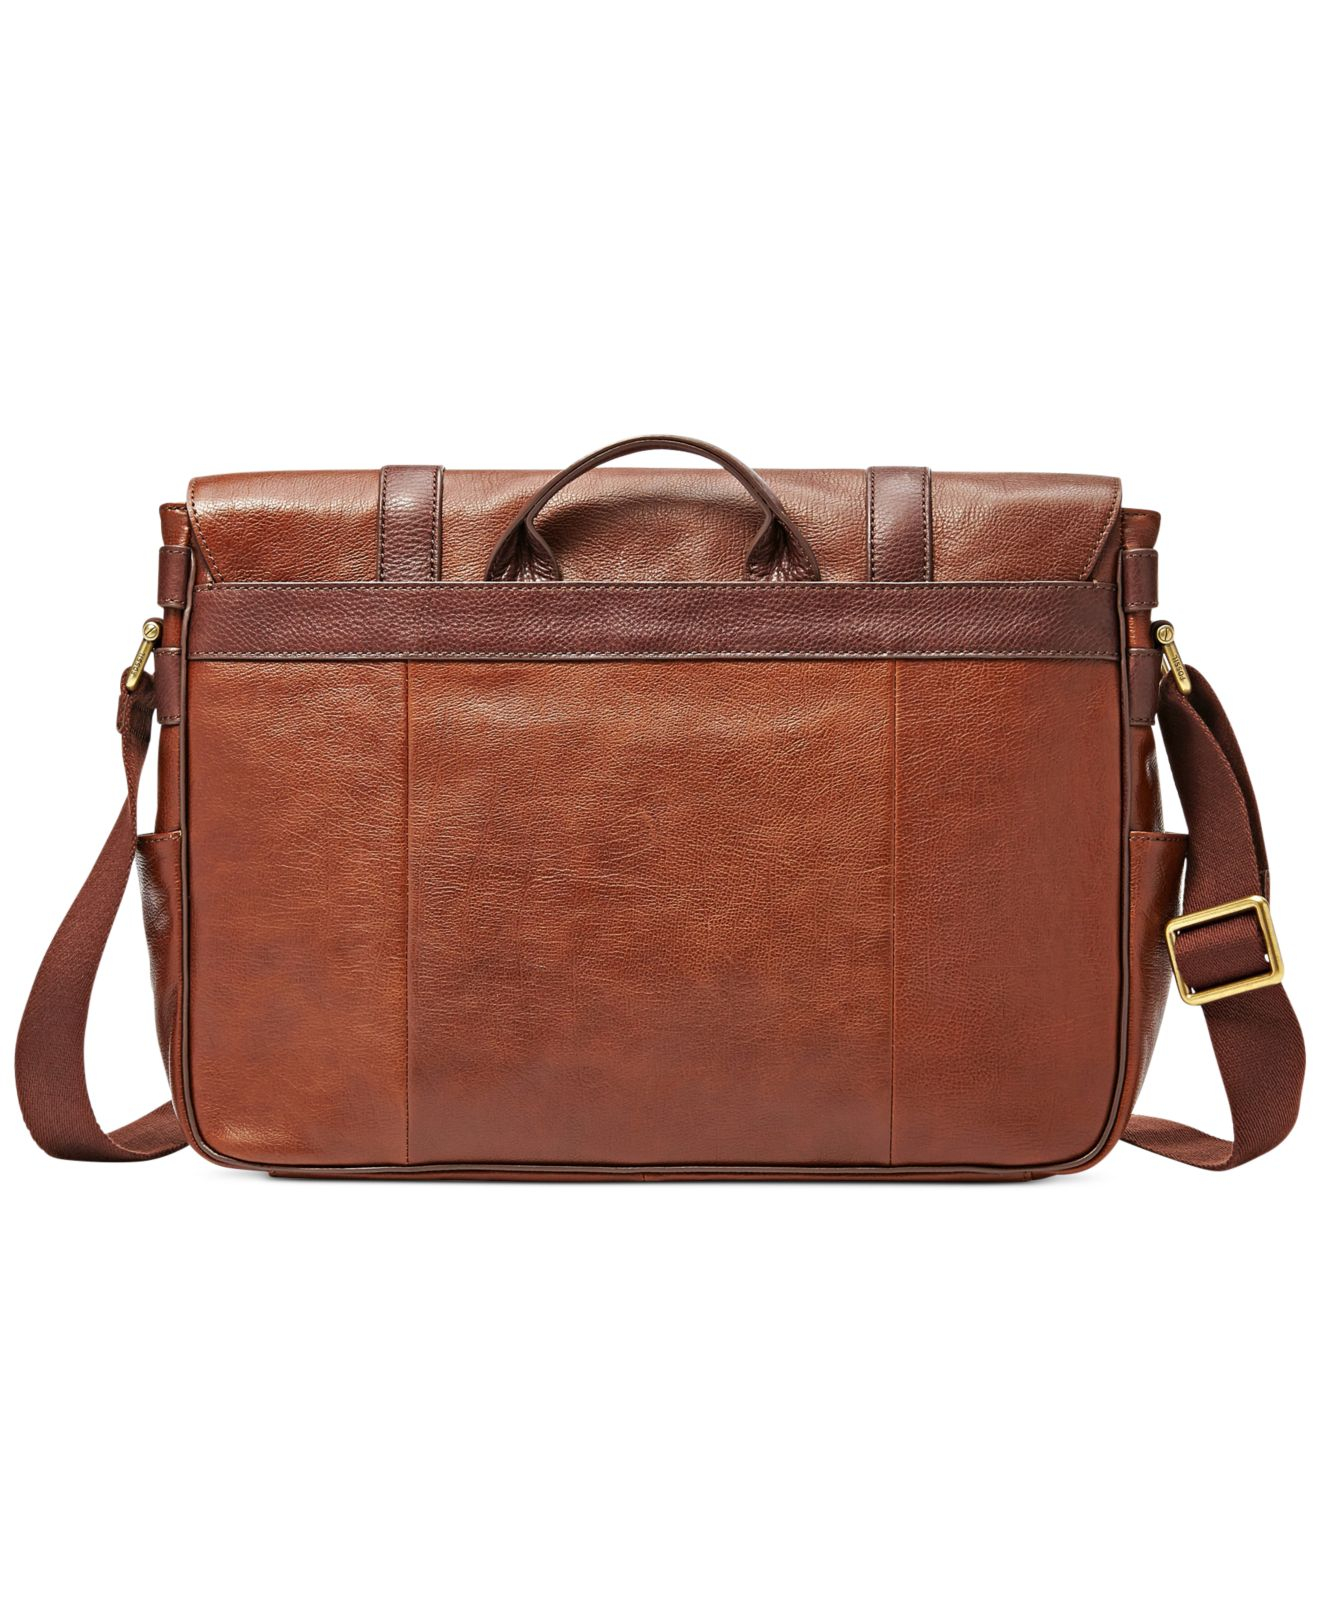 Fossil Leather Estate East-west Messenger Bag in Cognac (Brown) for Men - Lyst